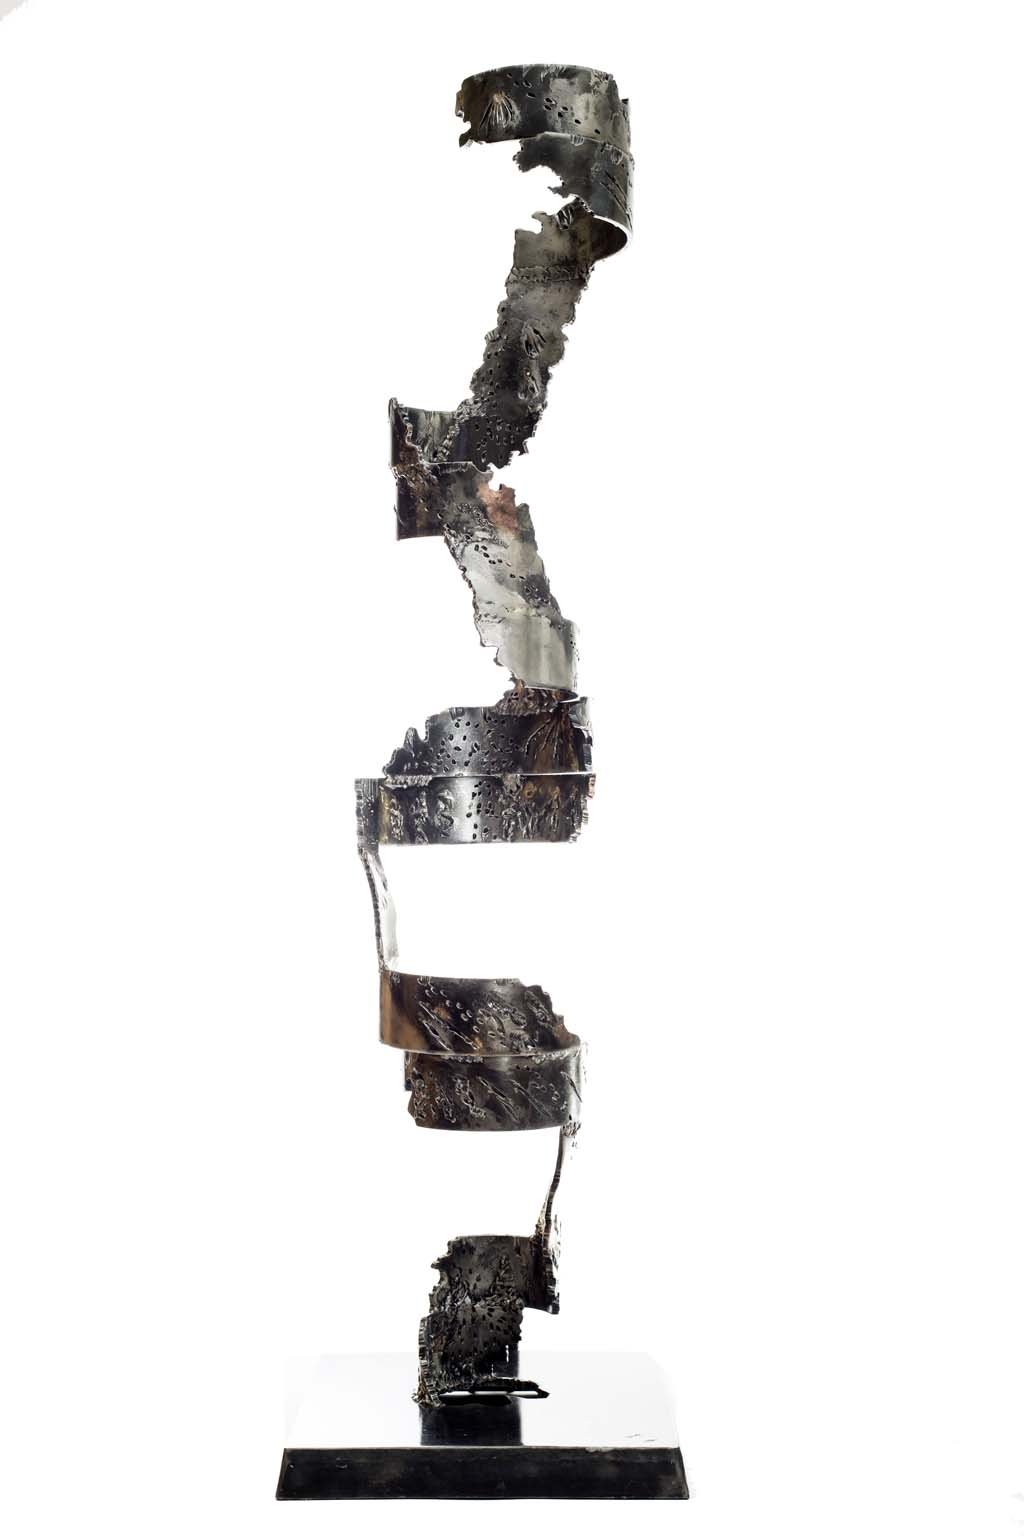 Insights IV | 2013 | Iron & brass sculpture | 148x40x40 cm | Rami Ater